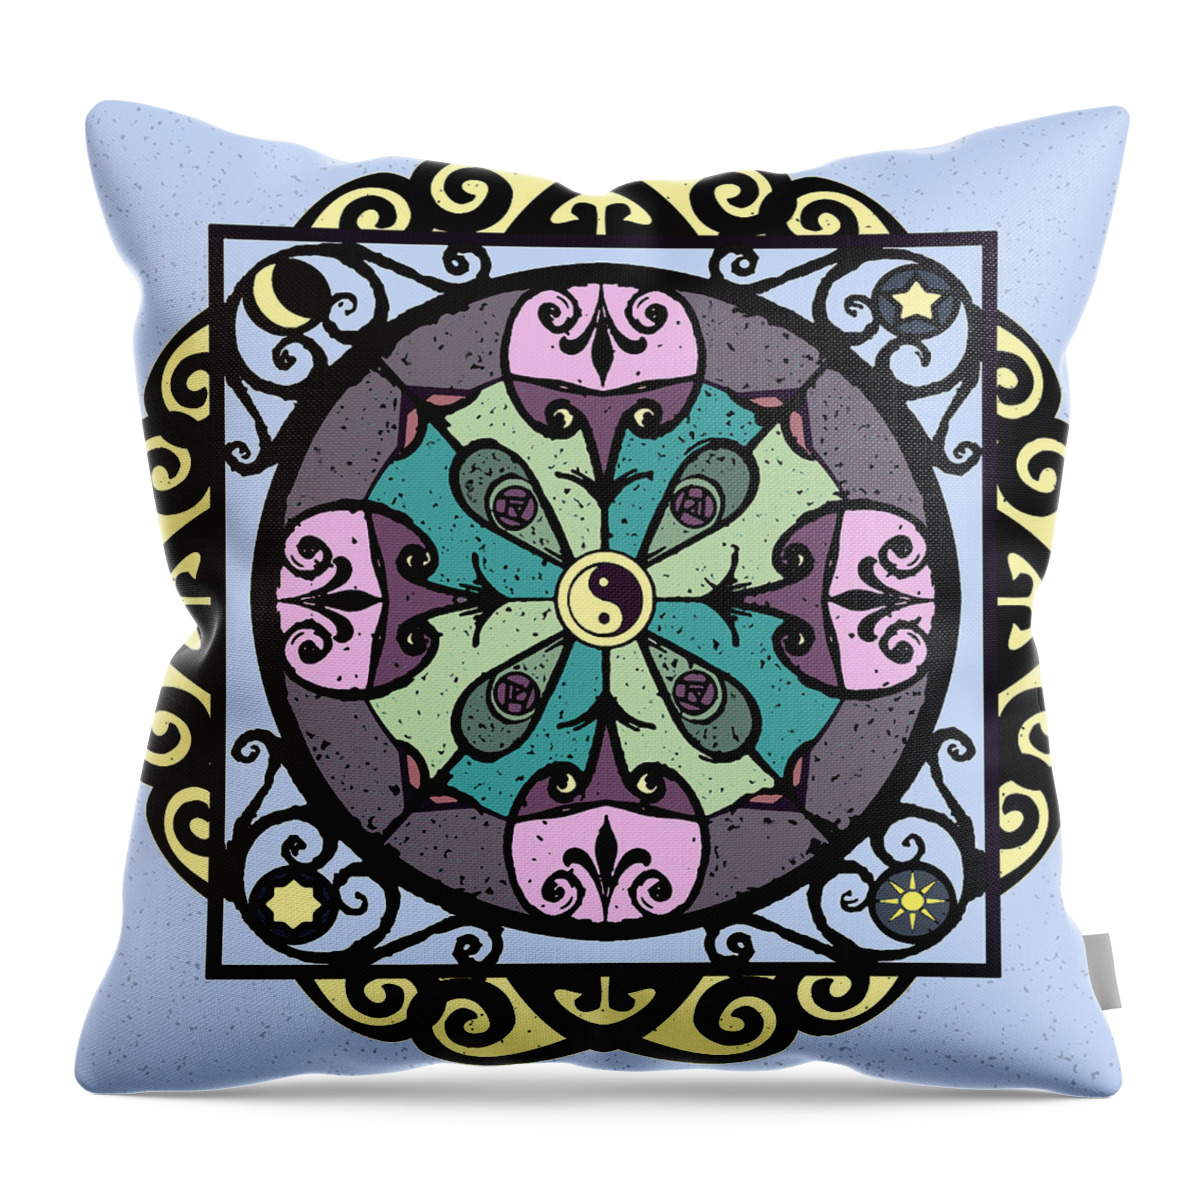 Mandala Throw Pillow featuring the digital art Garden Gate Mandala by Deborah Smith